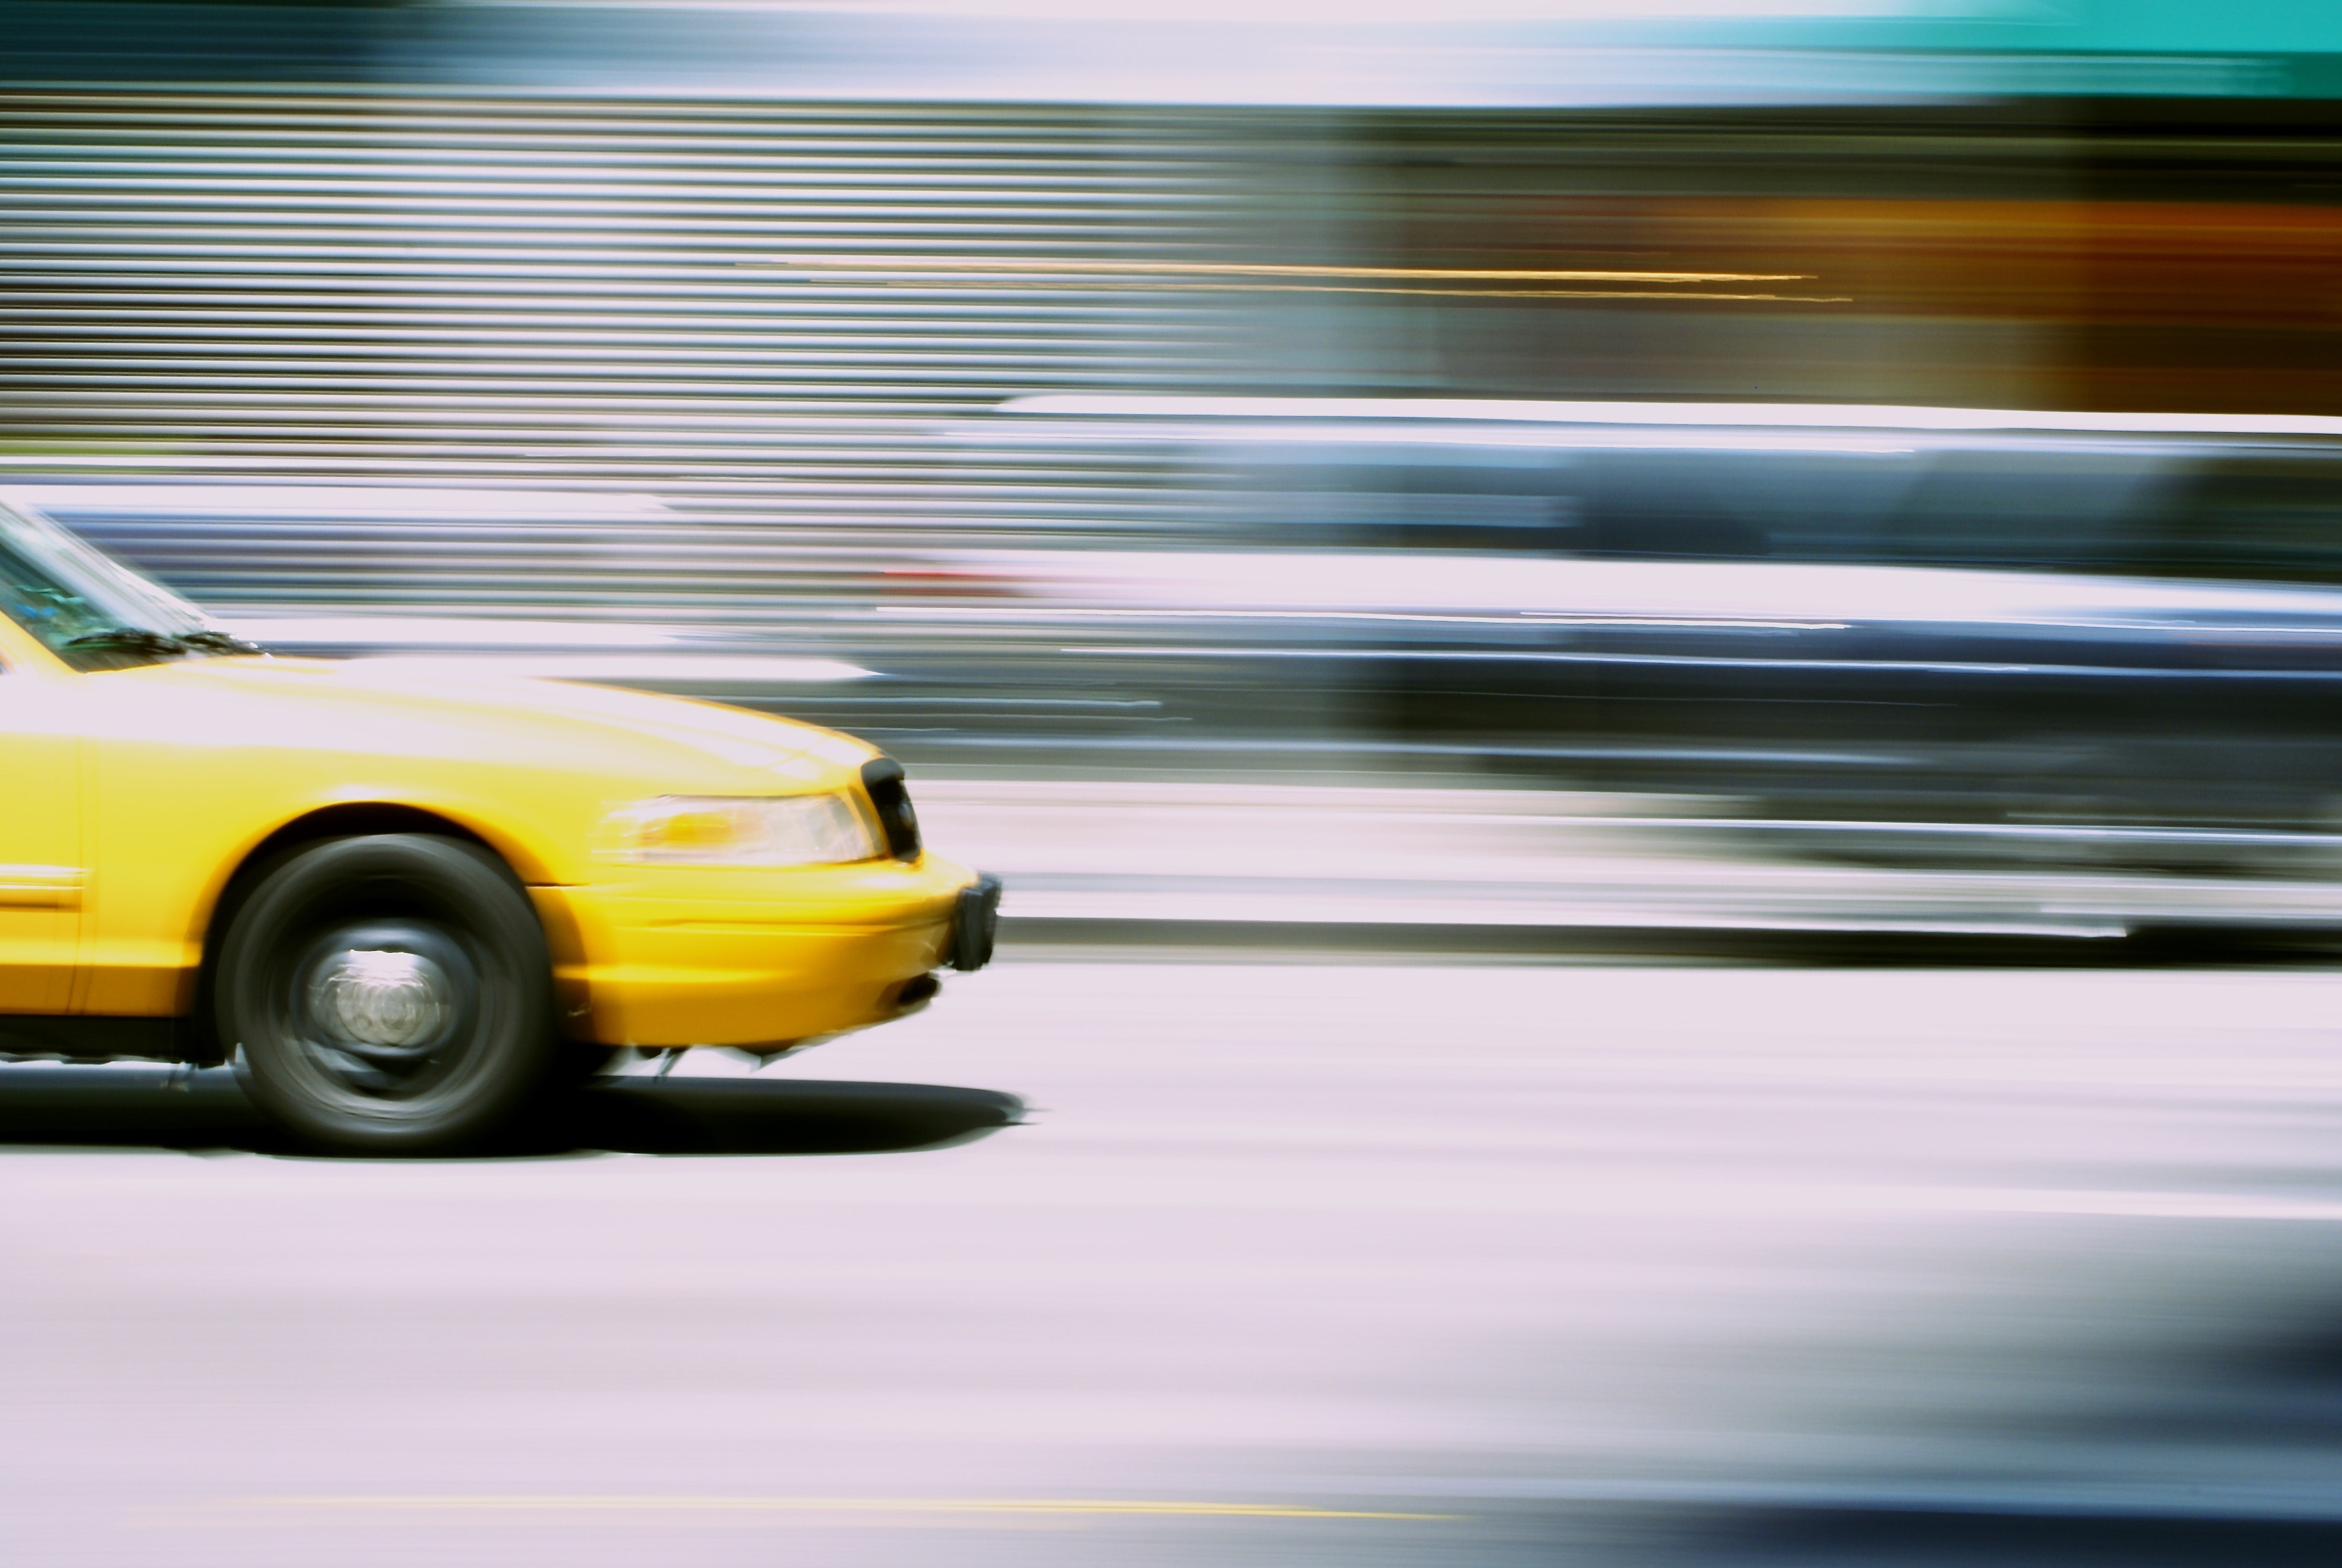 Motion, Taxi, Urban, Street, Transport, blurred motion, speed